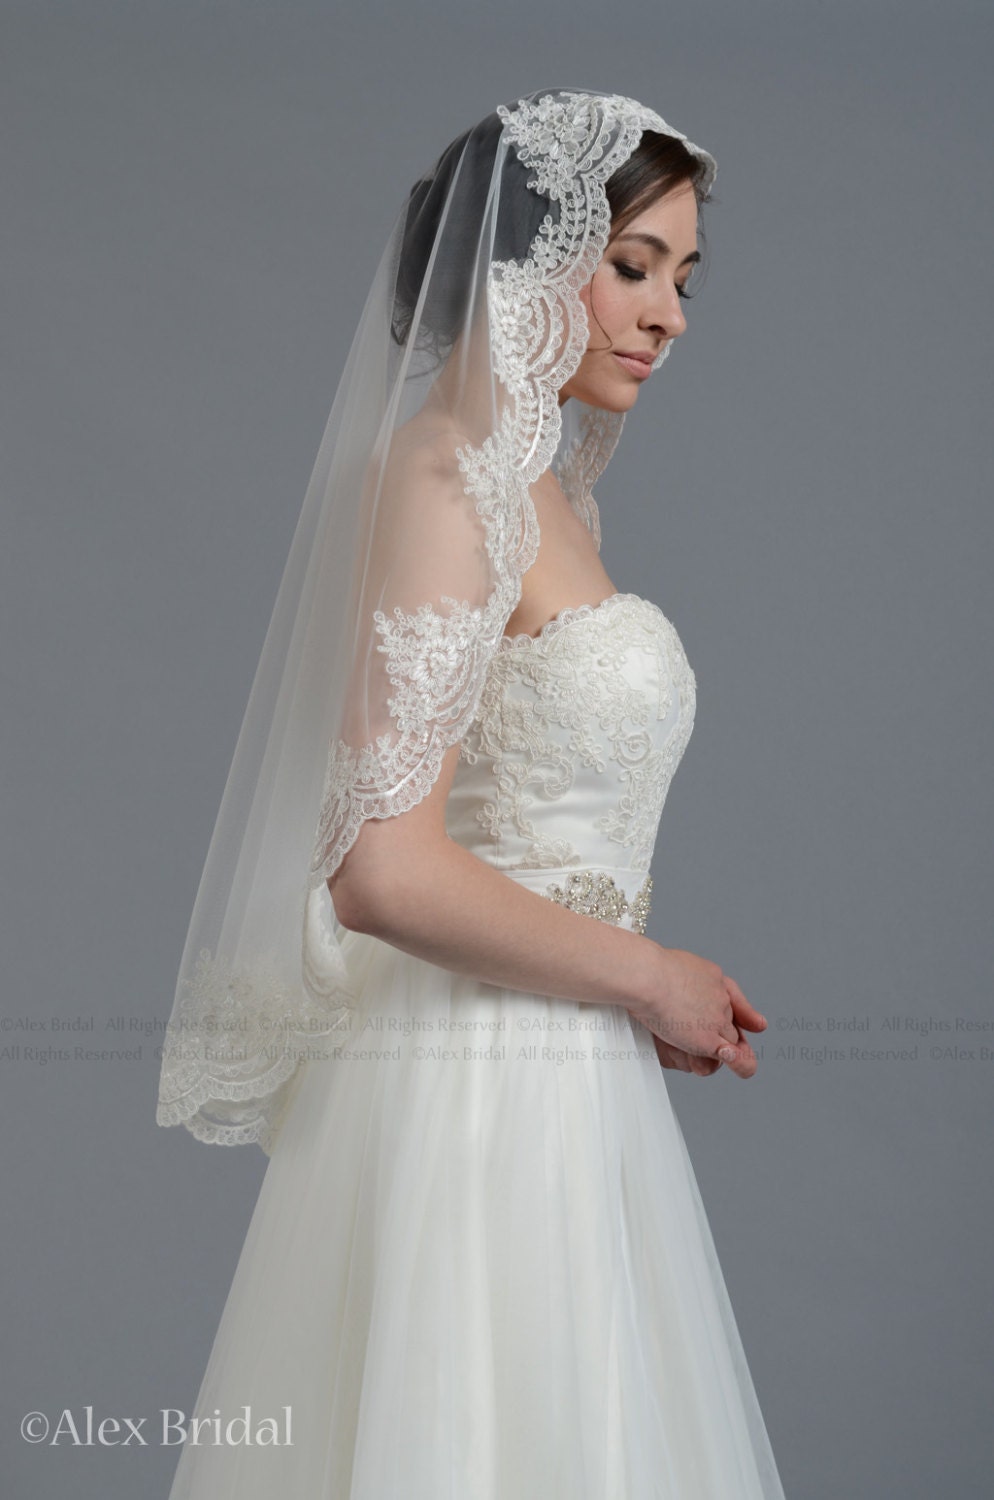 wedding veil, bridal veil, mantilla veil, elbow length veil, alencon lace veil, wedding veil ivory, fingertip length veil